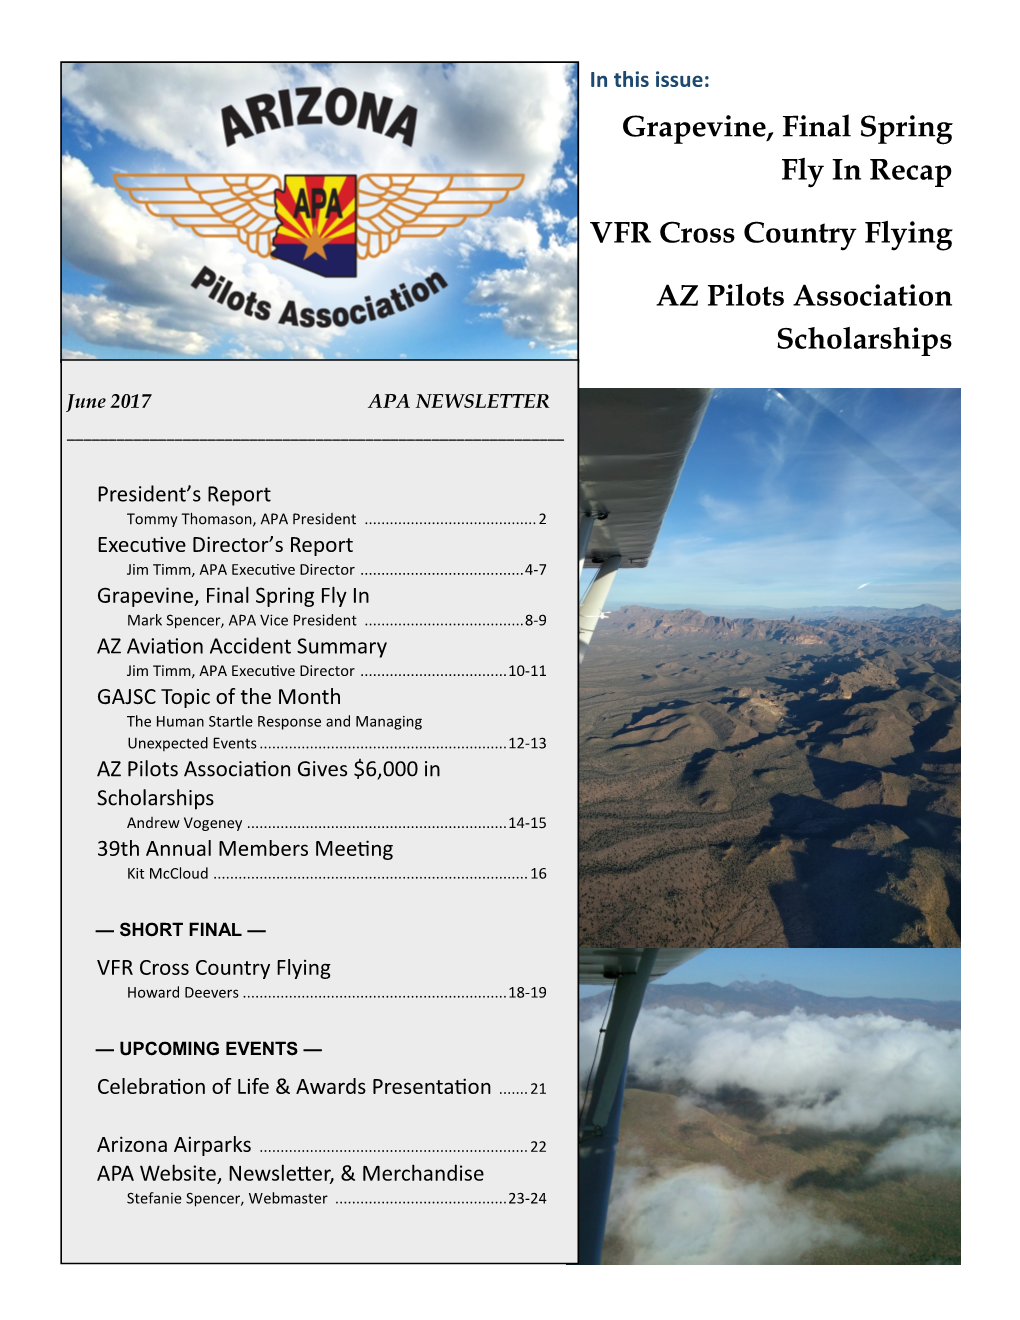 Grapevine, Final Spring Fly in Recap VFR Cross Country Flying AZ Pilots